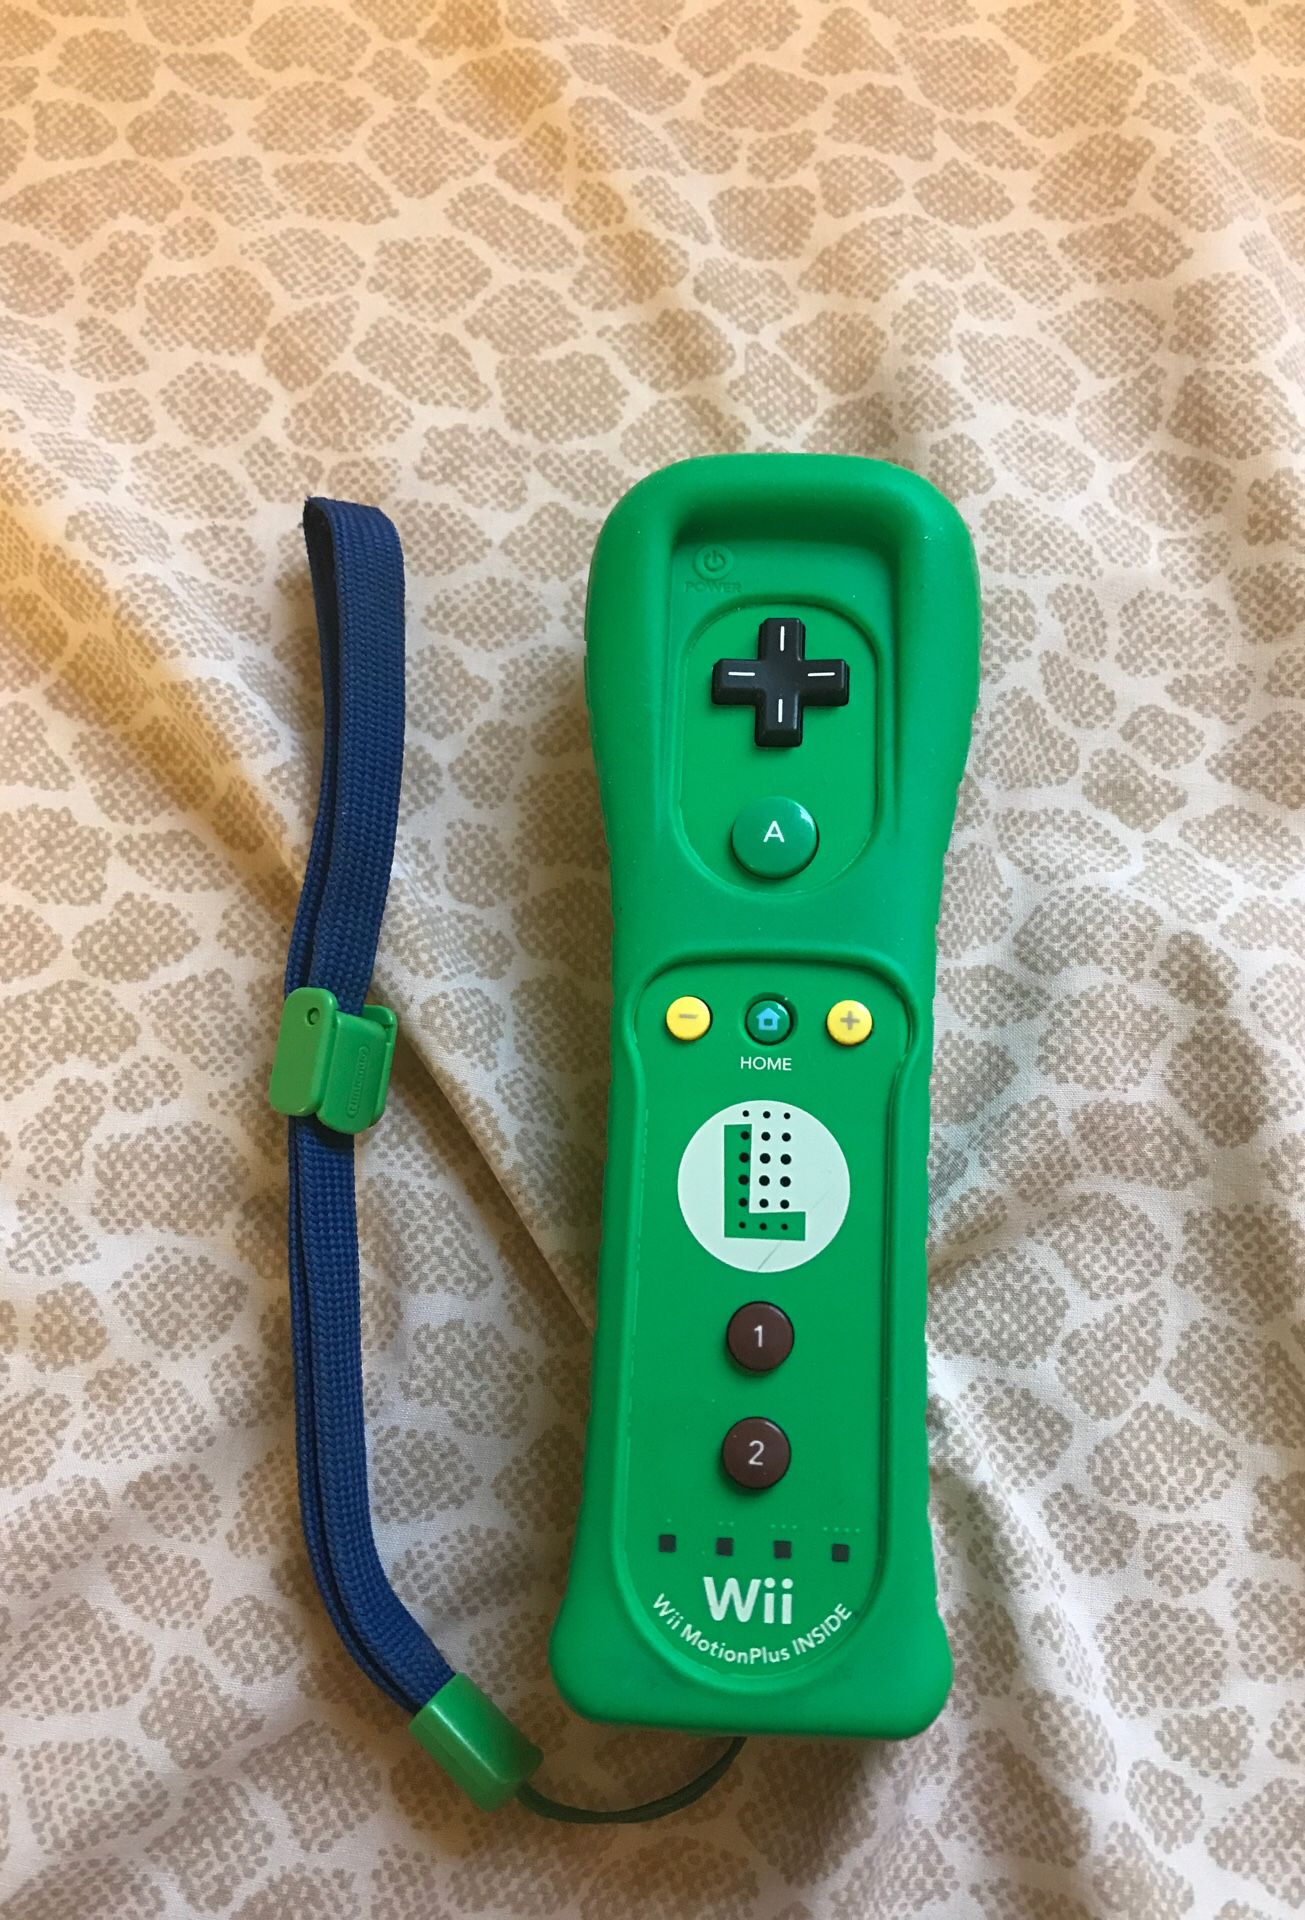 Nintendo Wii/Wii U remote